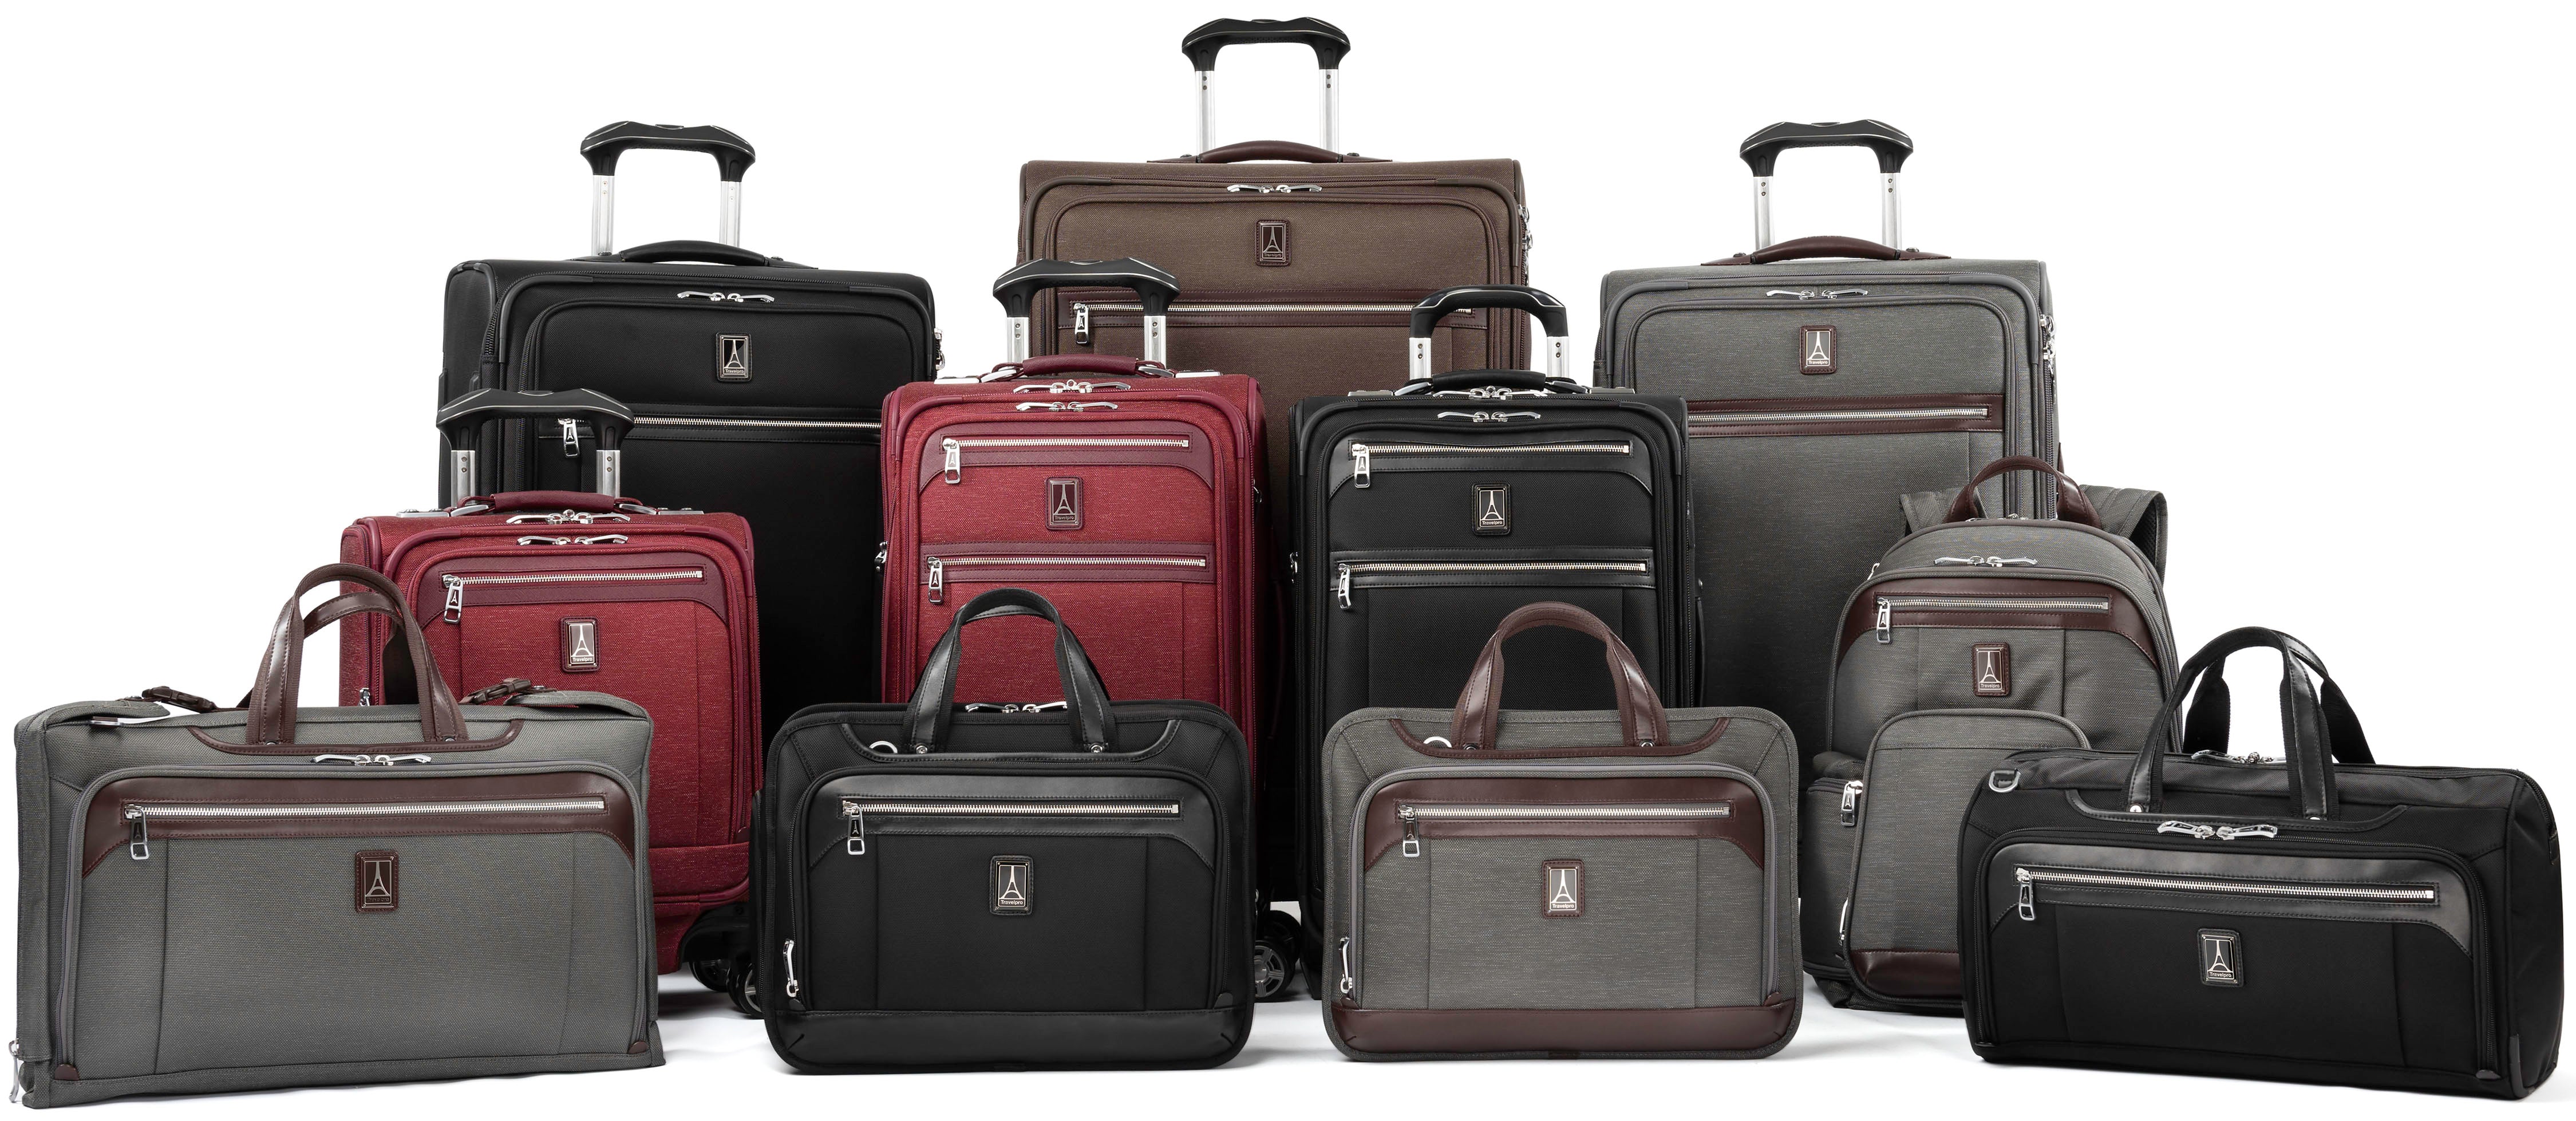 Travelpro Platinum® Elite Carry-on Rolling Garment Bag 4091840-01